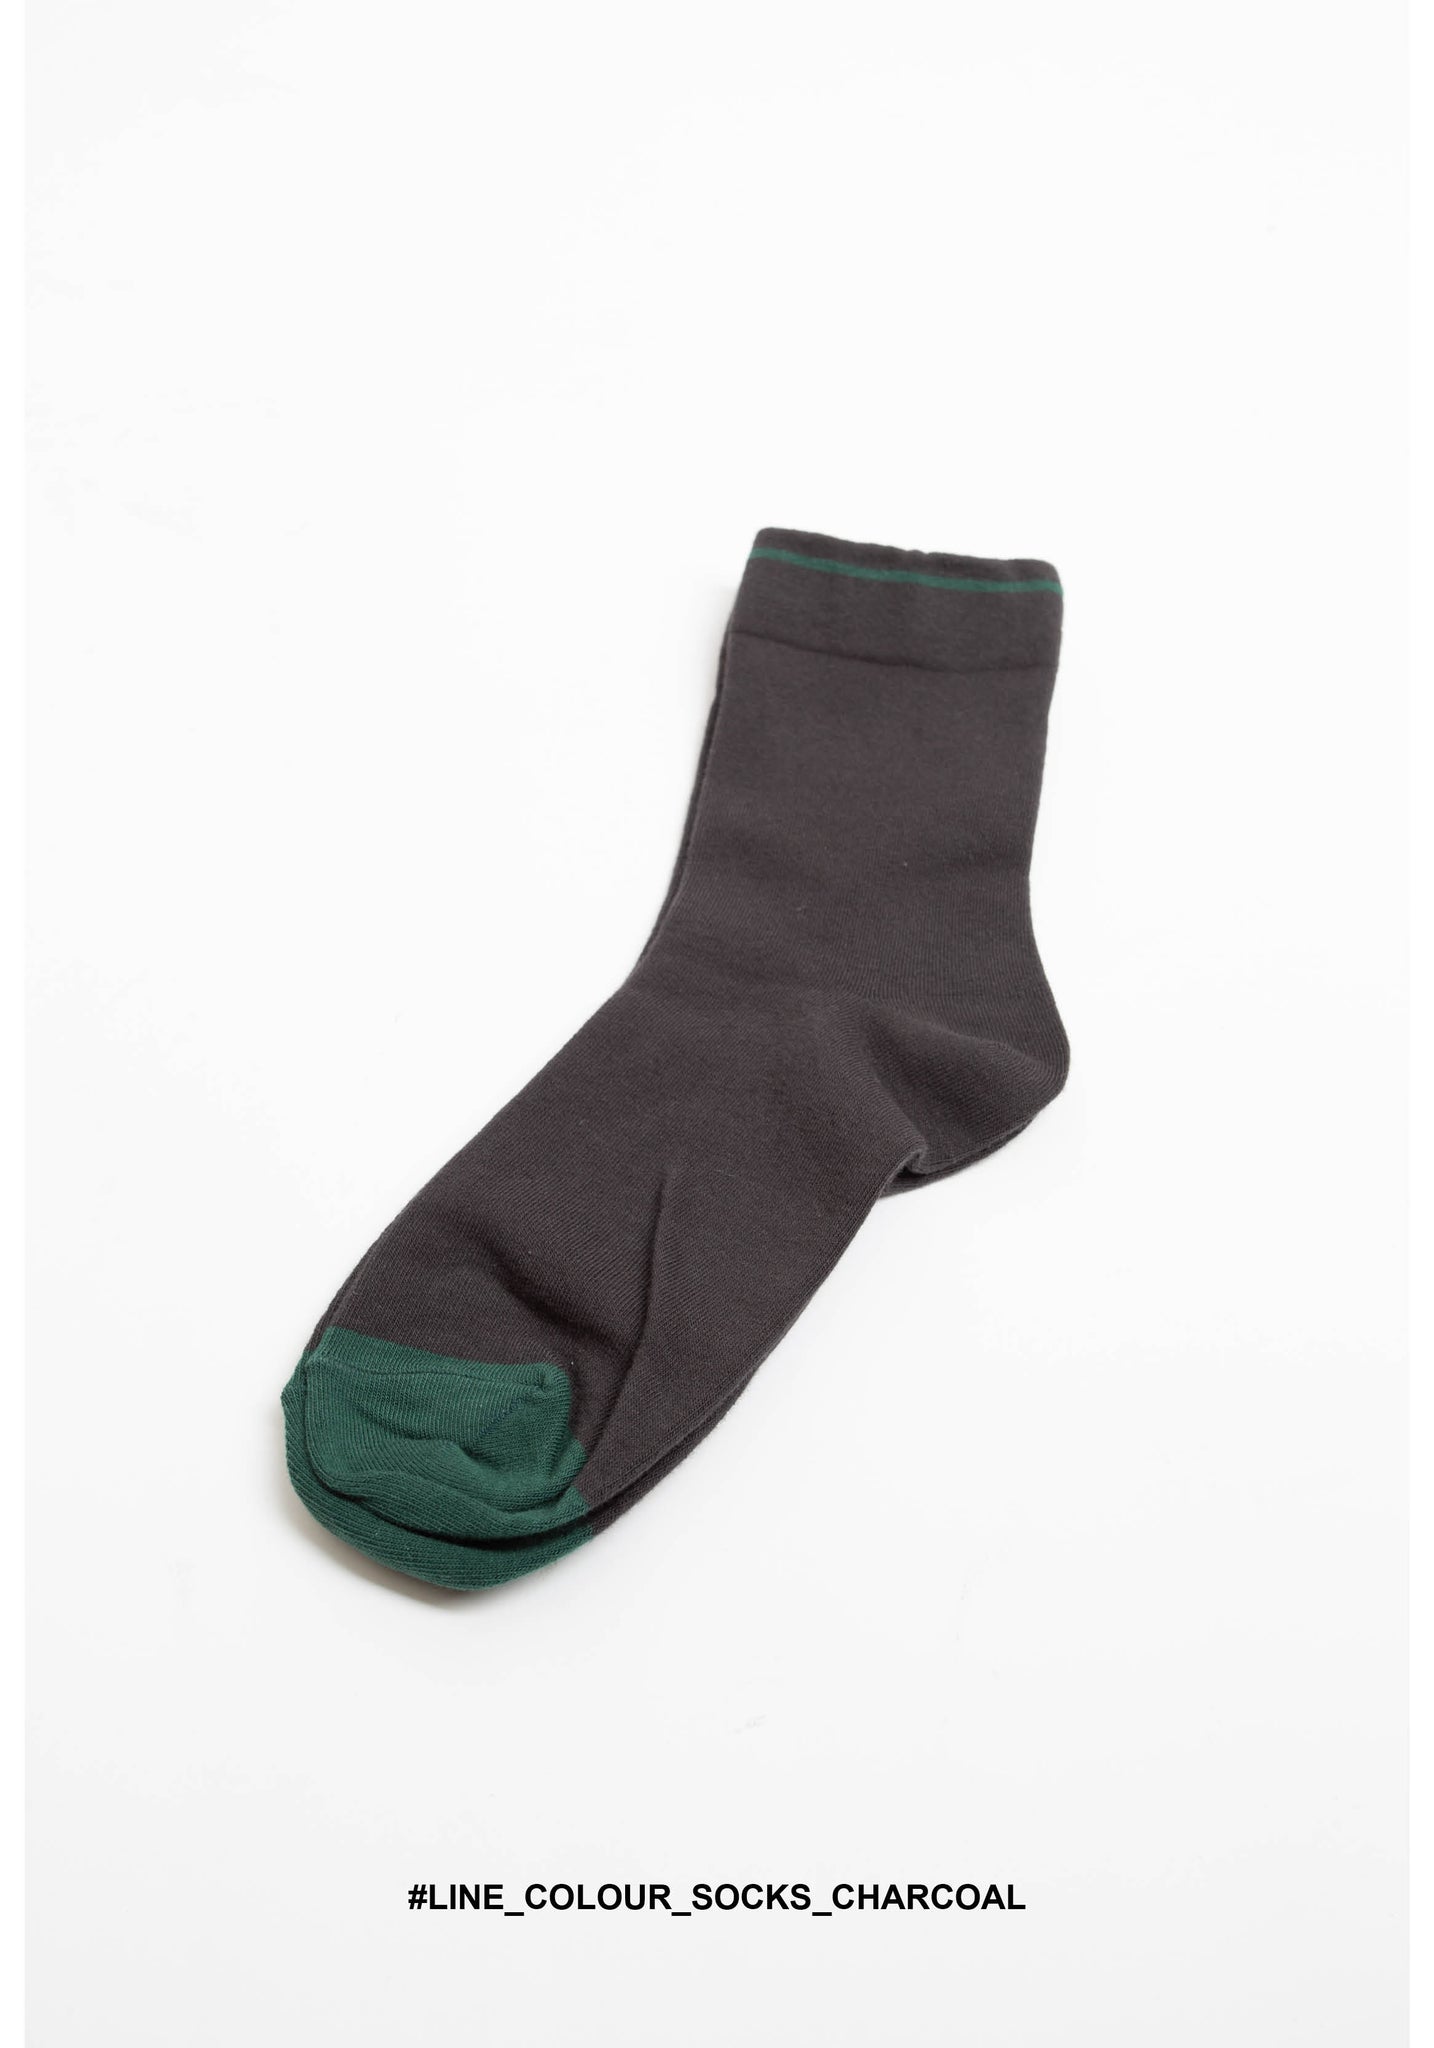 Line Colour Socks Charcoal - whoami